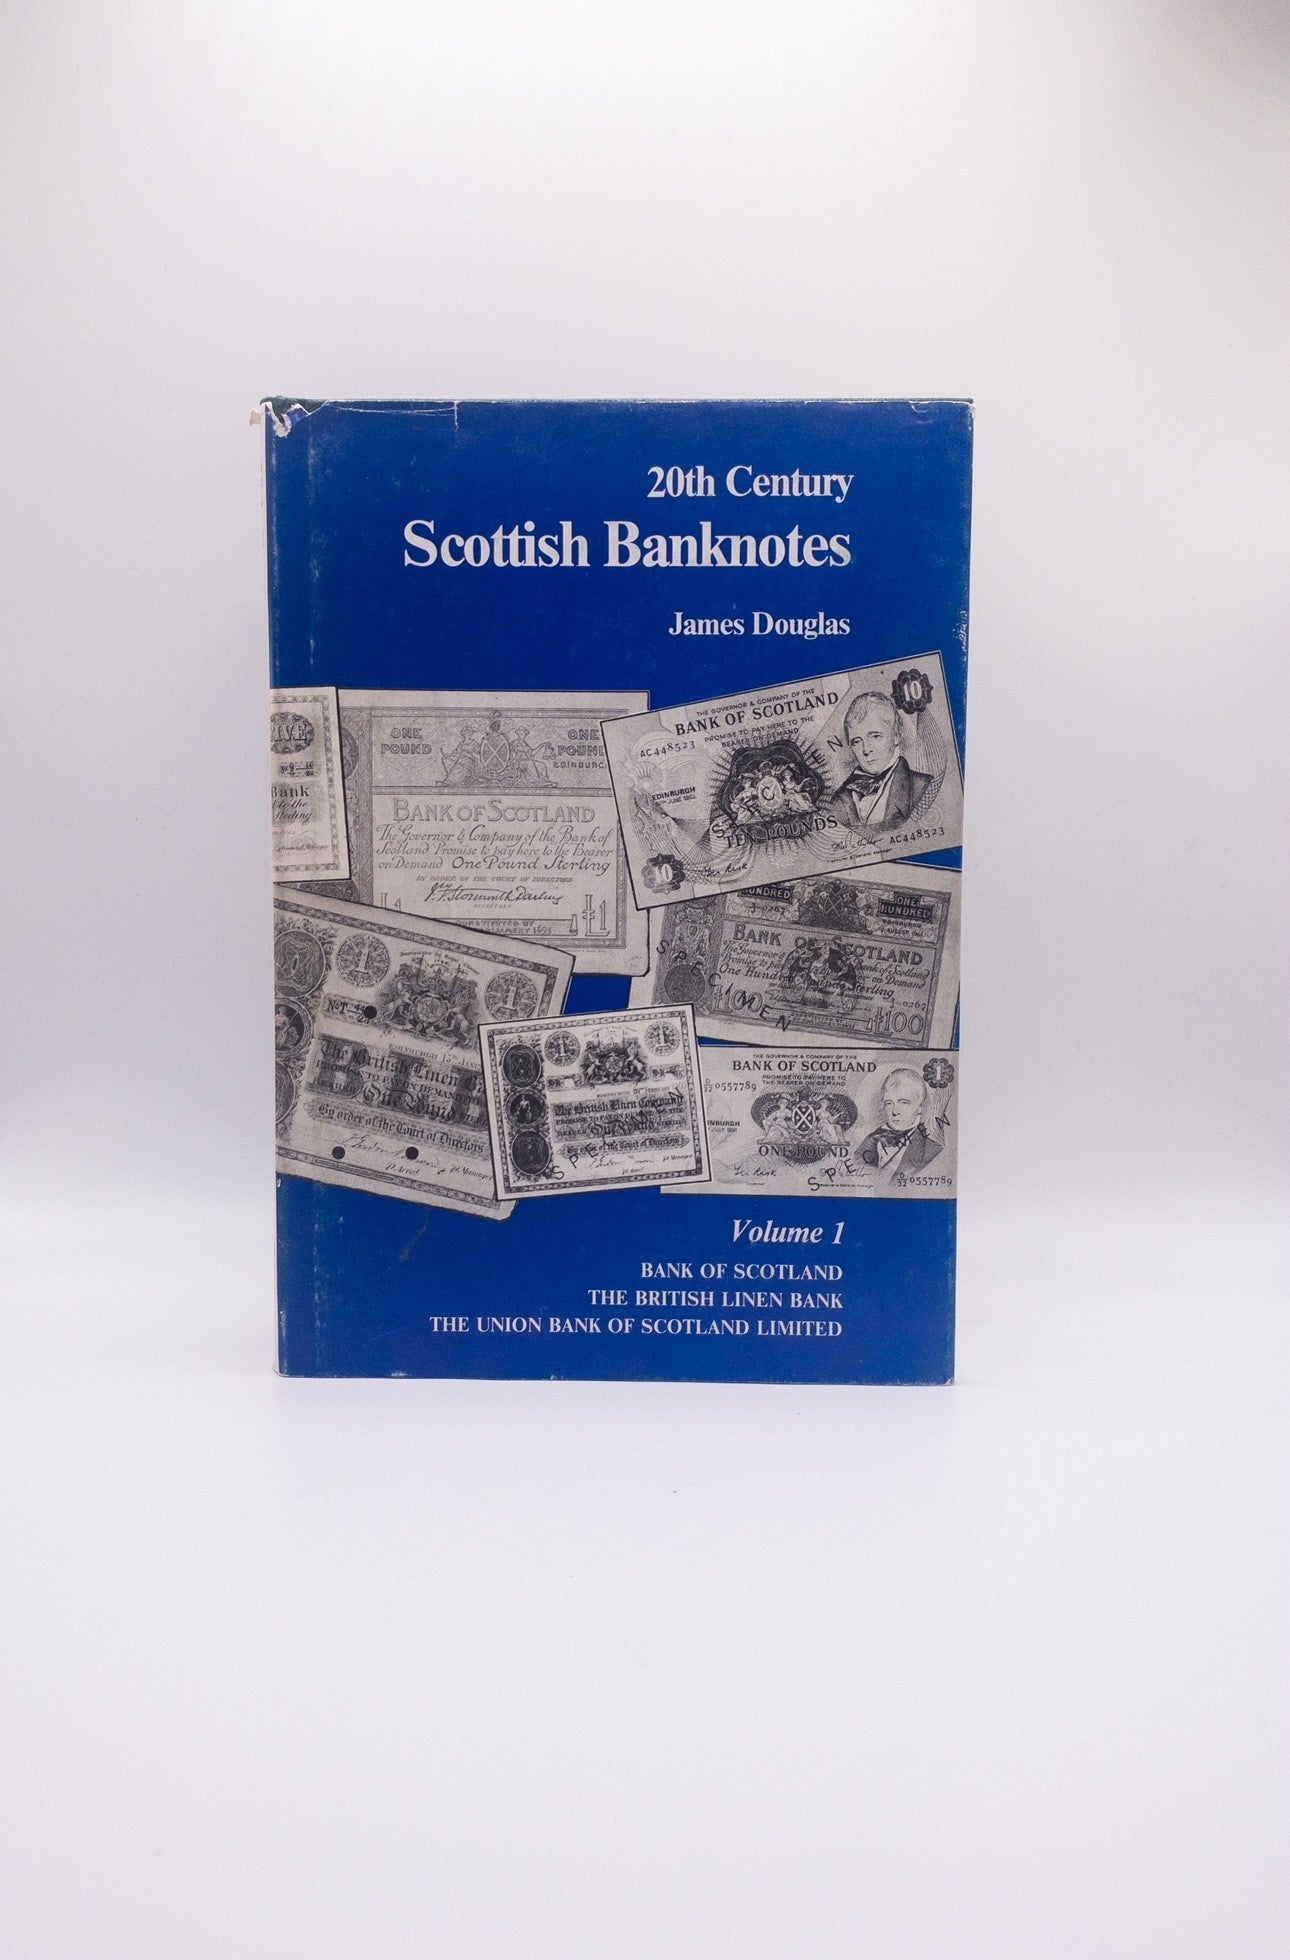 20th Century Scottish Banknotes by James Douglas